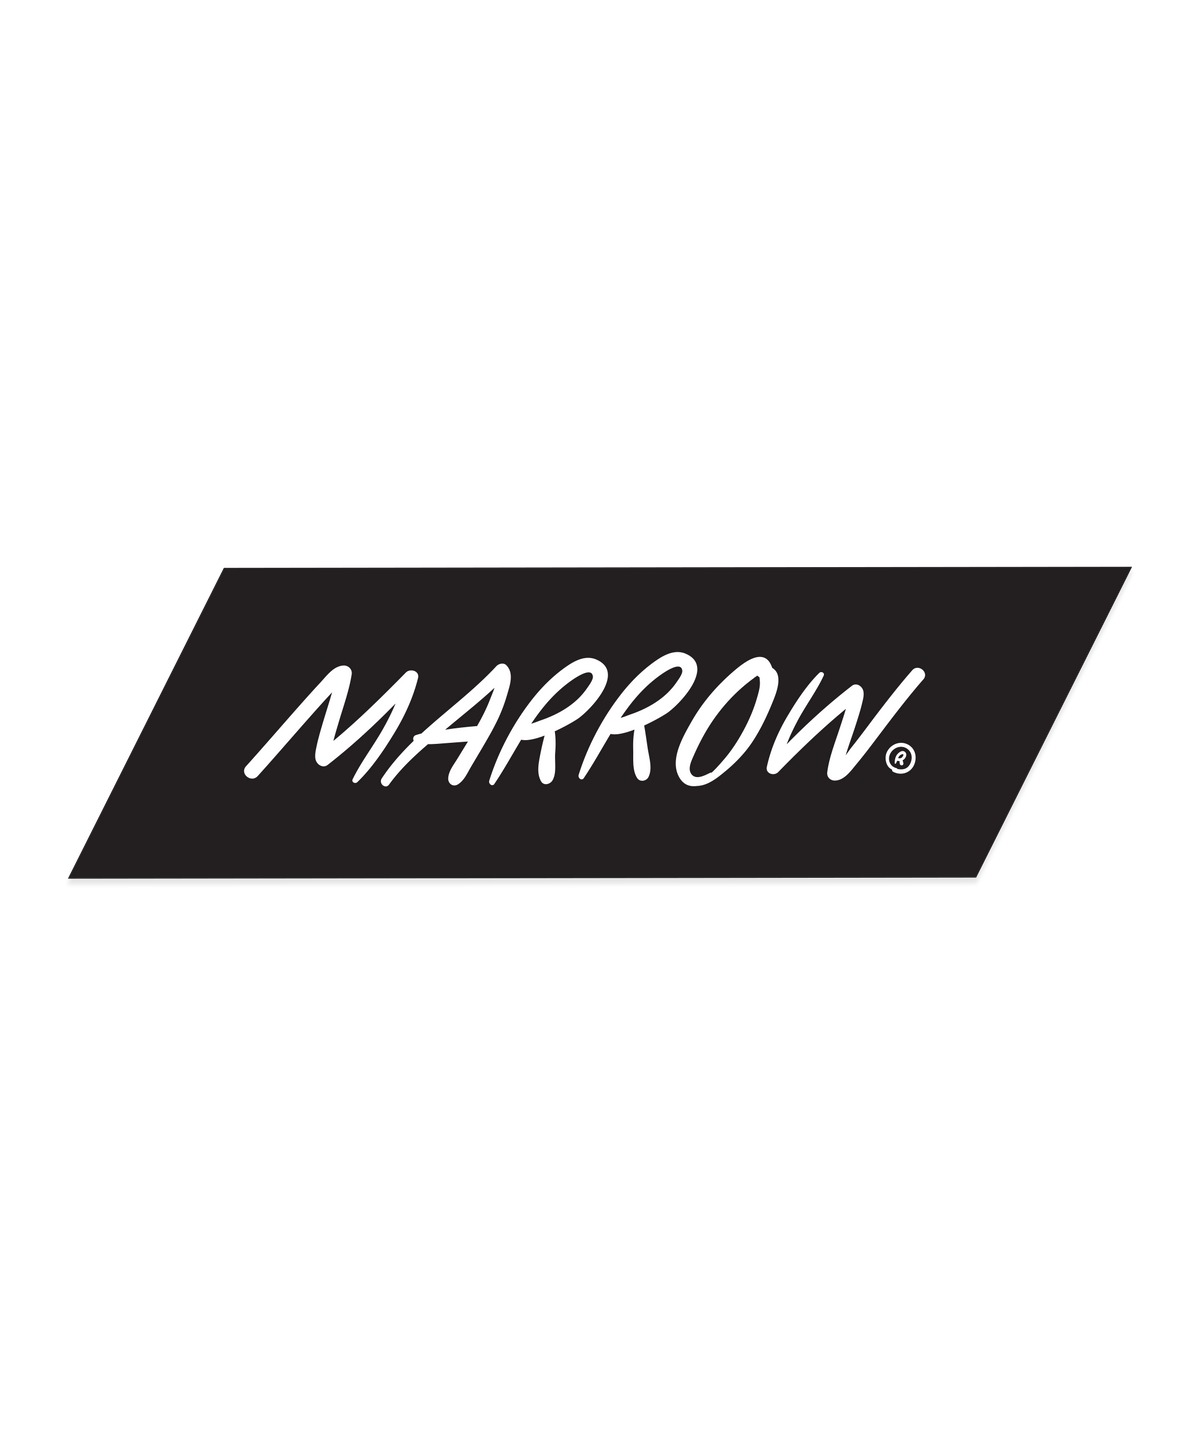 Marrow Parallel bumper sticker